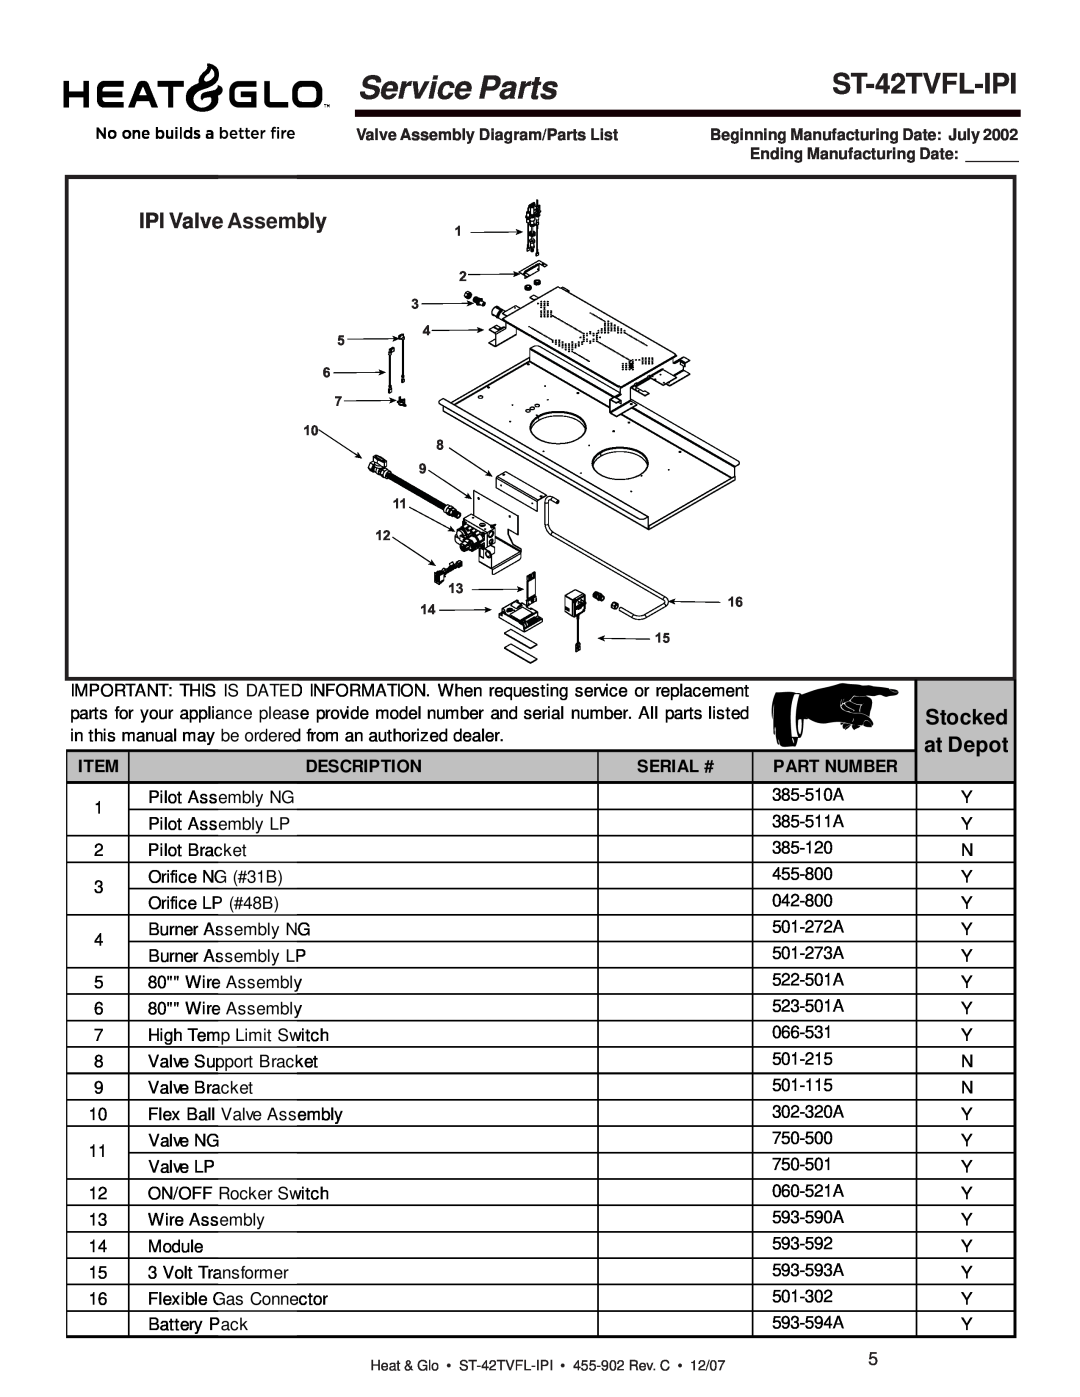 Heat & Glo LifeStyle ST-42TVFL-IPI owner manual Service Parts, Stocked, at Depot, IPI Valve Assembly, Description, Serial # 